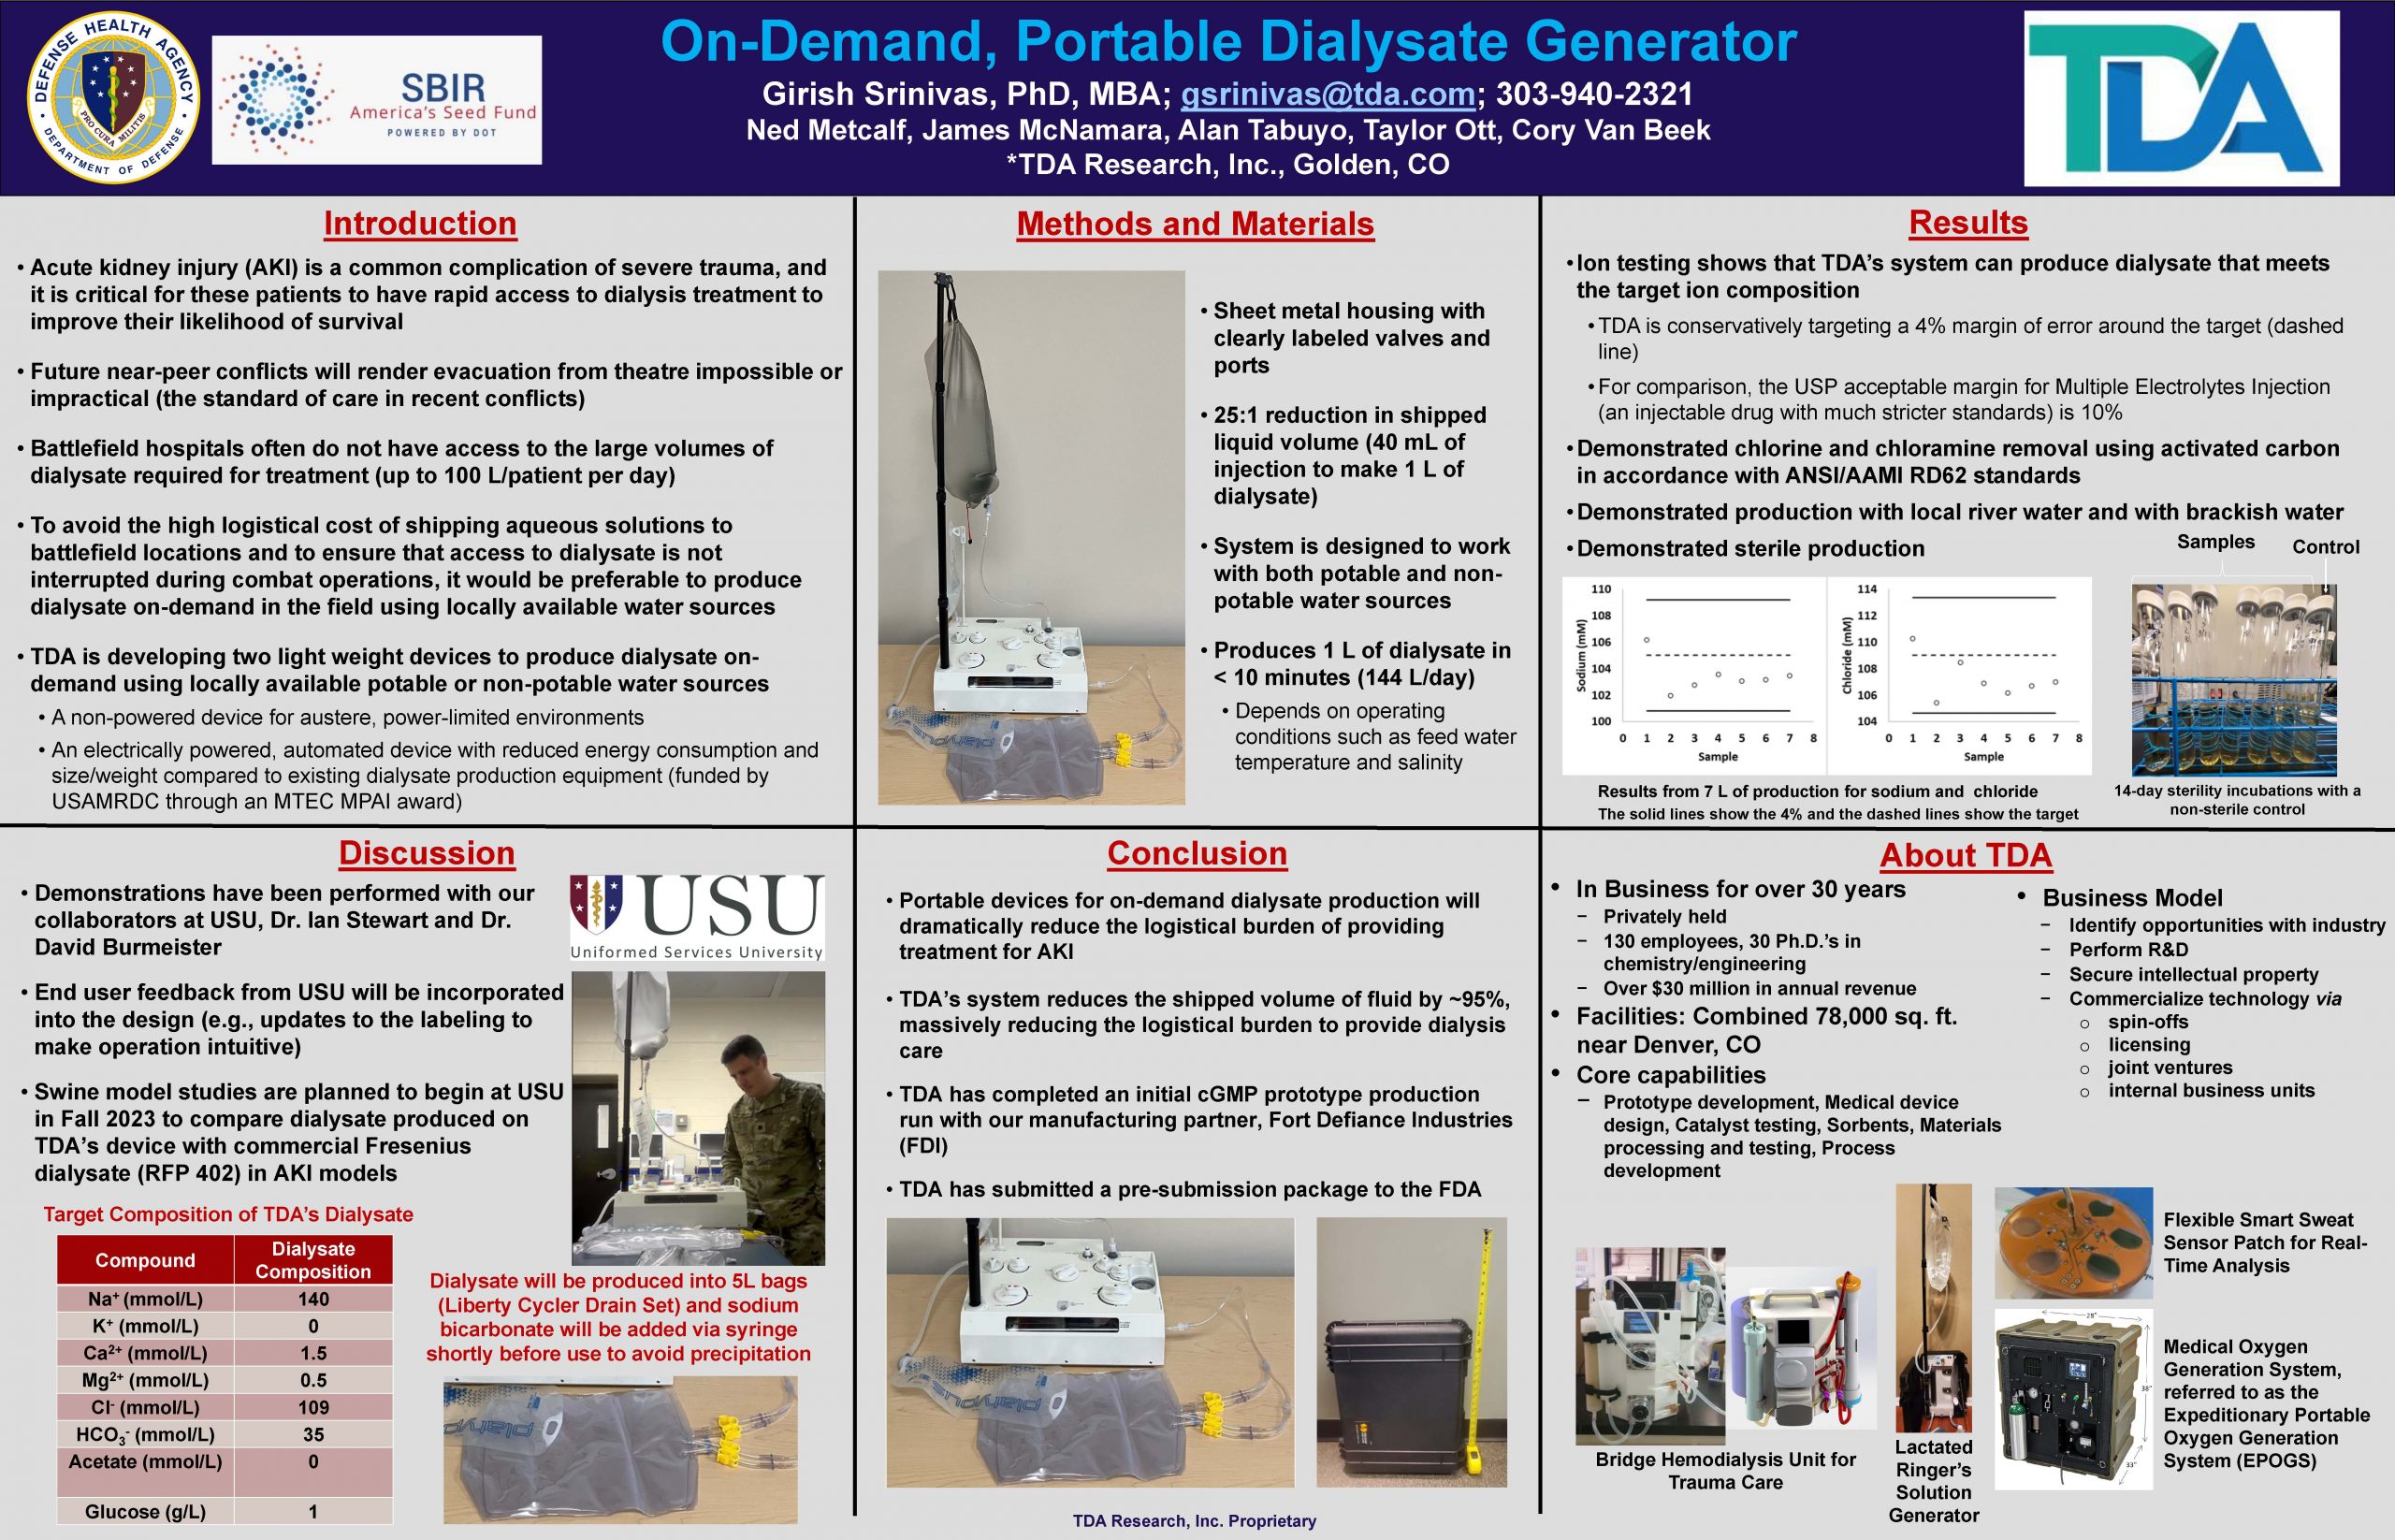 Screenshot of TDA Research, Inc. “On-Demand, Portable Dialysate Generator” MHSRS Poster